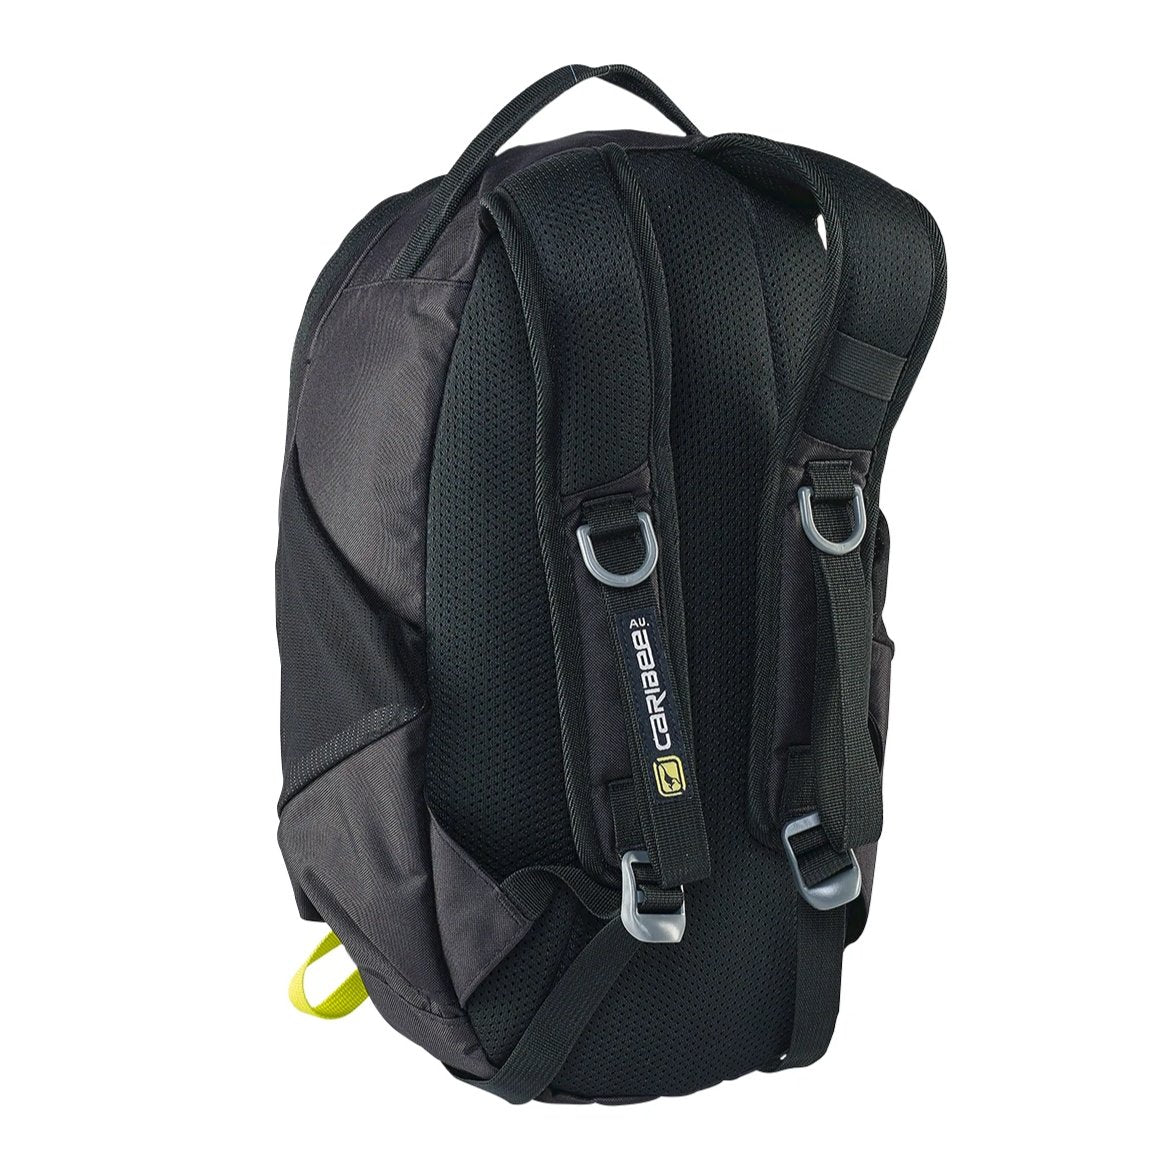 2020 Caribee Hot Shot backpack black harness